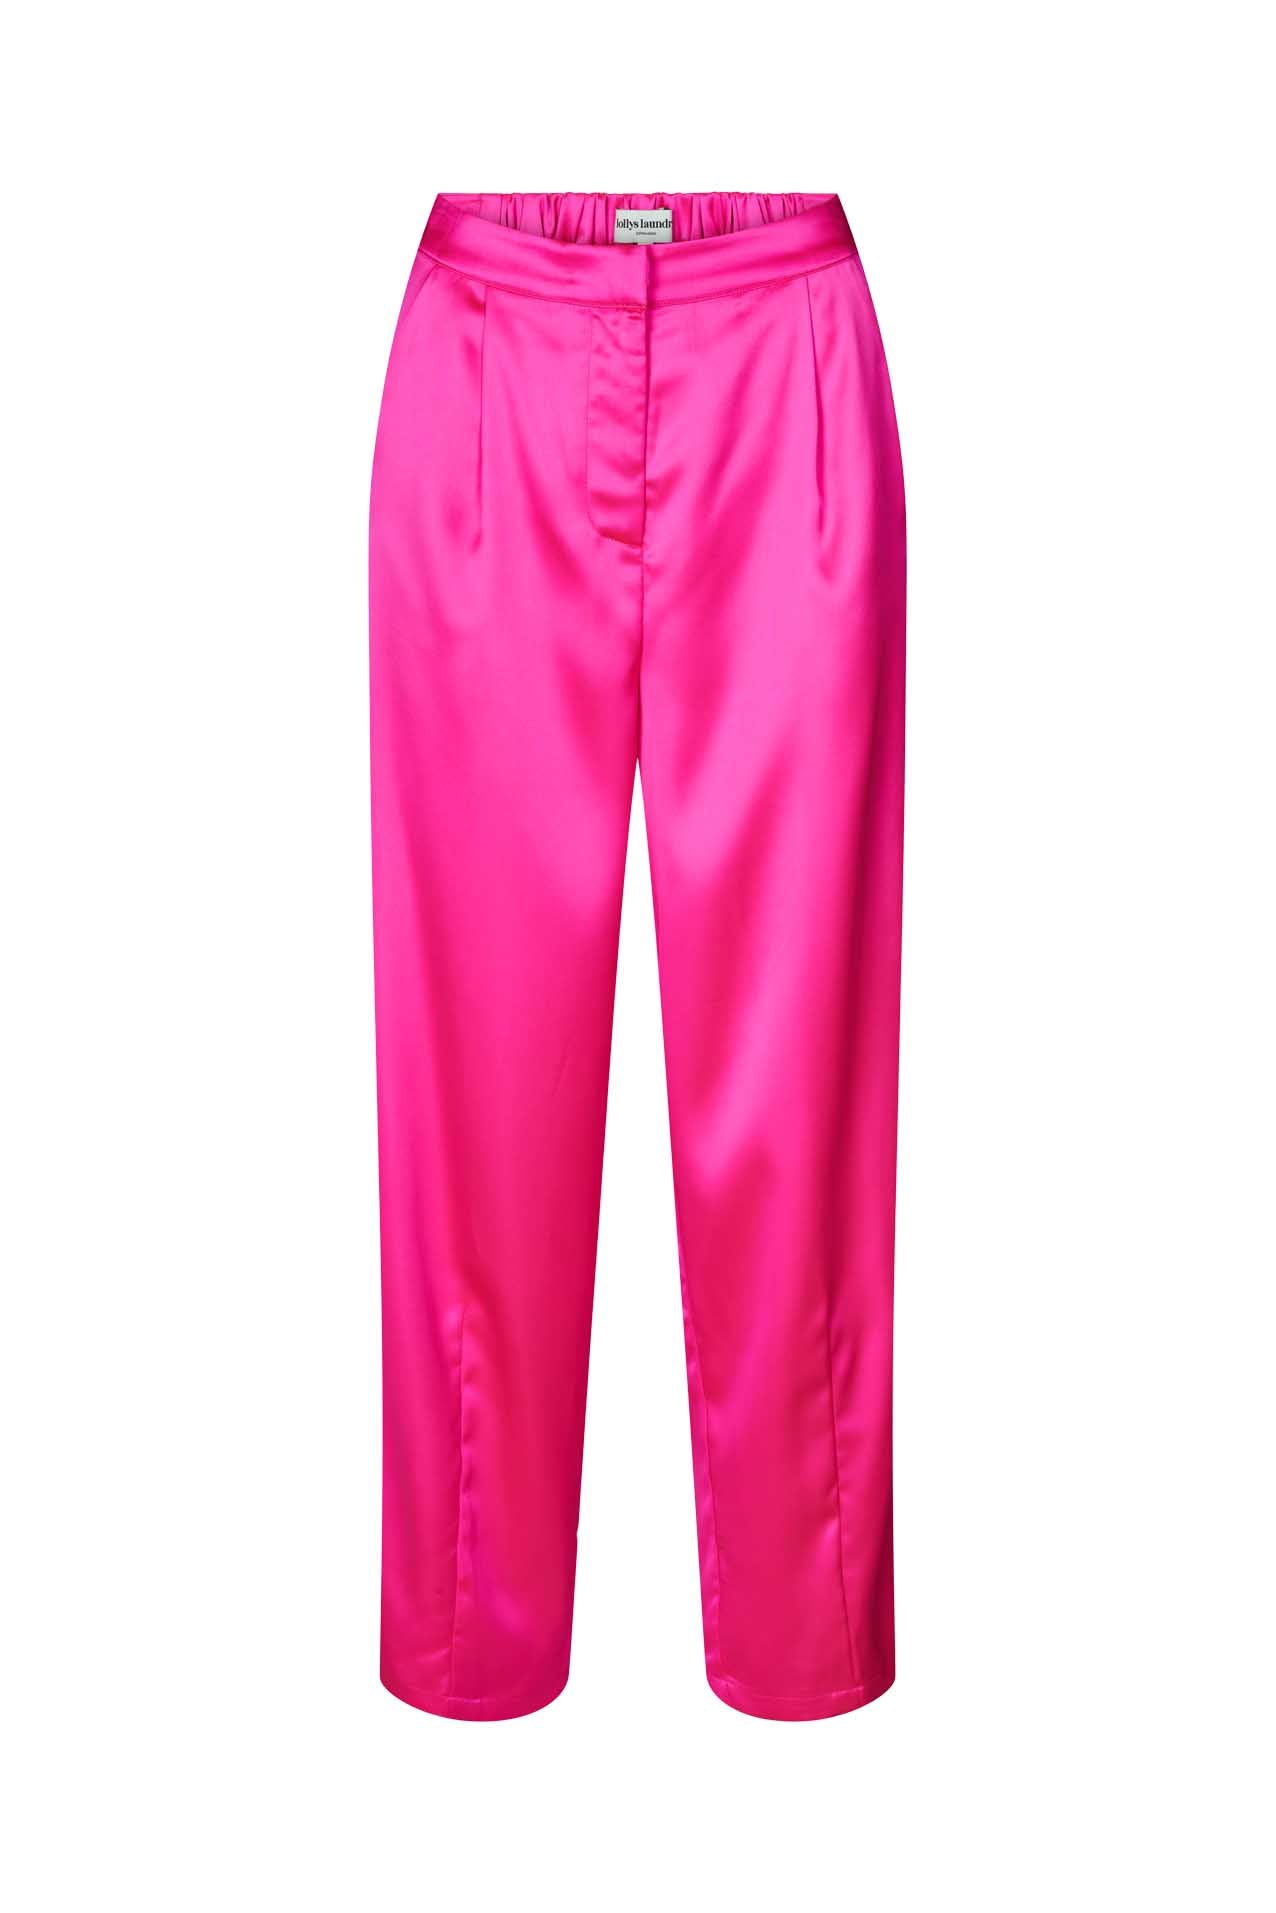 Lollys Laundry Maisie Pants Pants 51 Pink